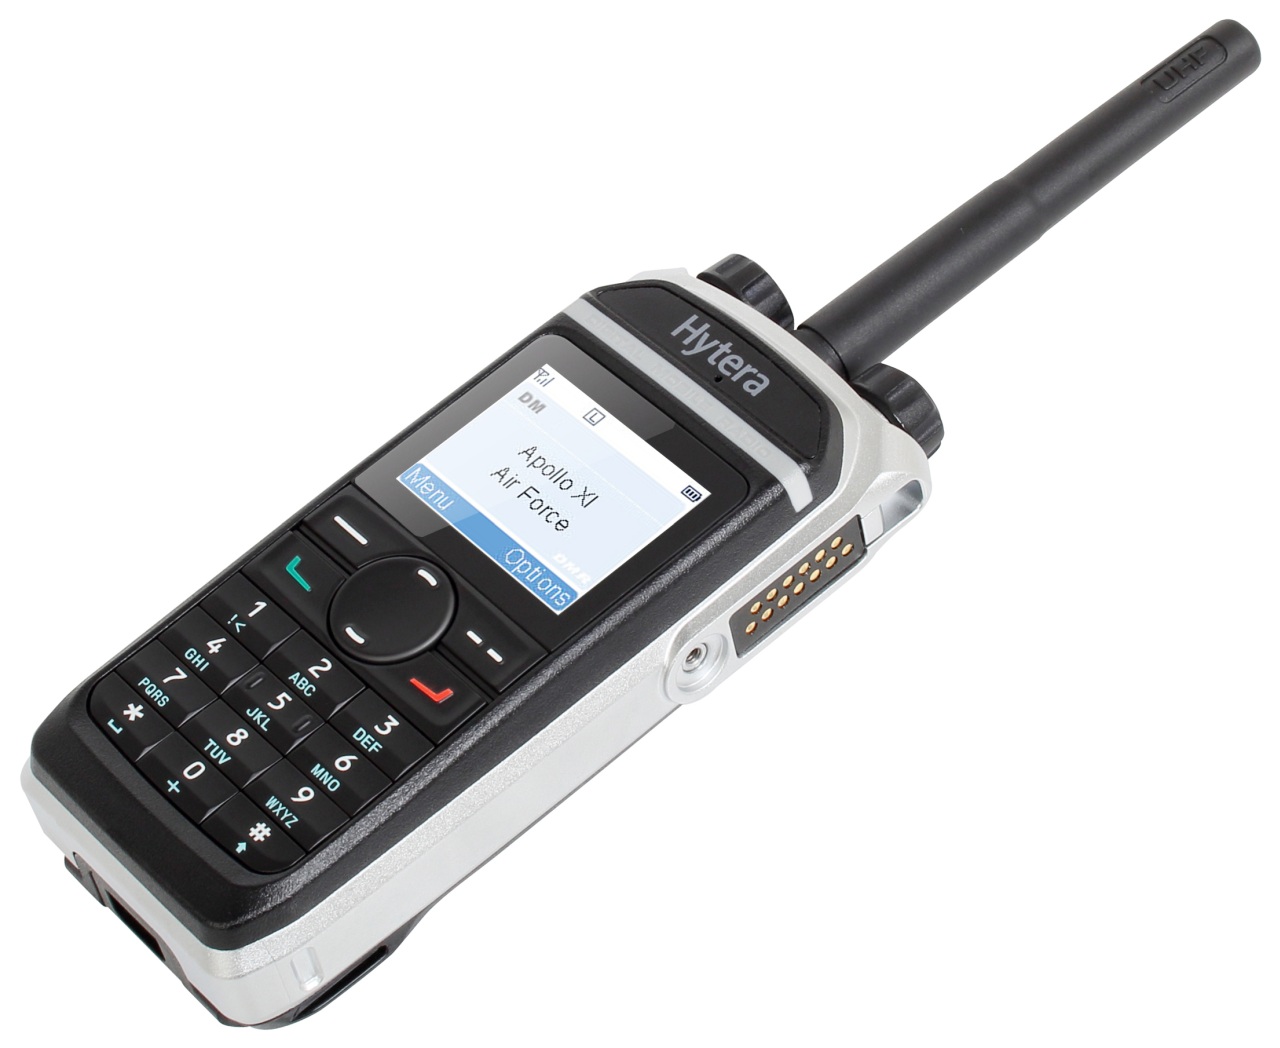 PD685 DMR-Handheld Radio UHF 40 bit encryption ARC4 DMRA 128/256 bit (opt) 580002041100